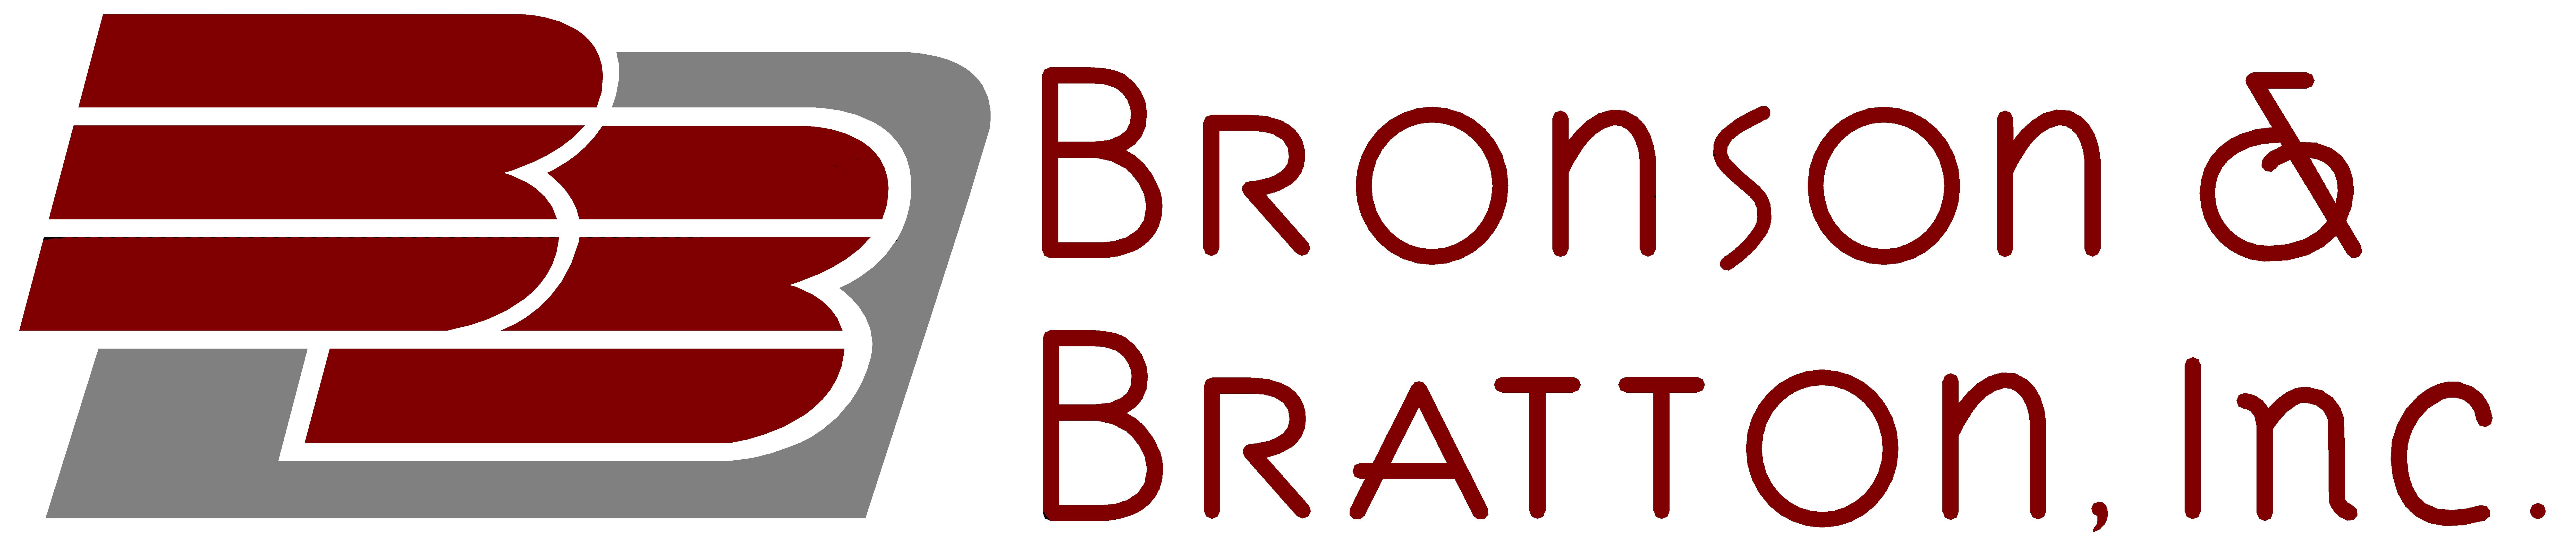 Bronson & Bratton, Inc. Logo